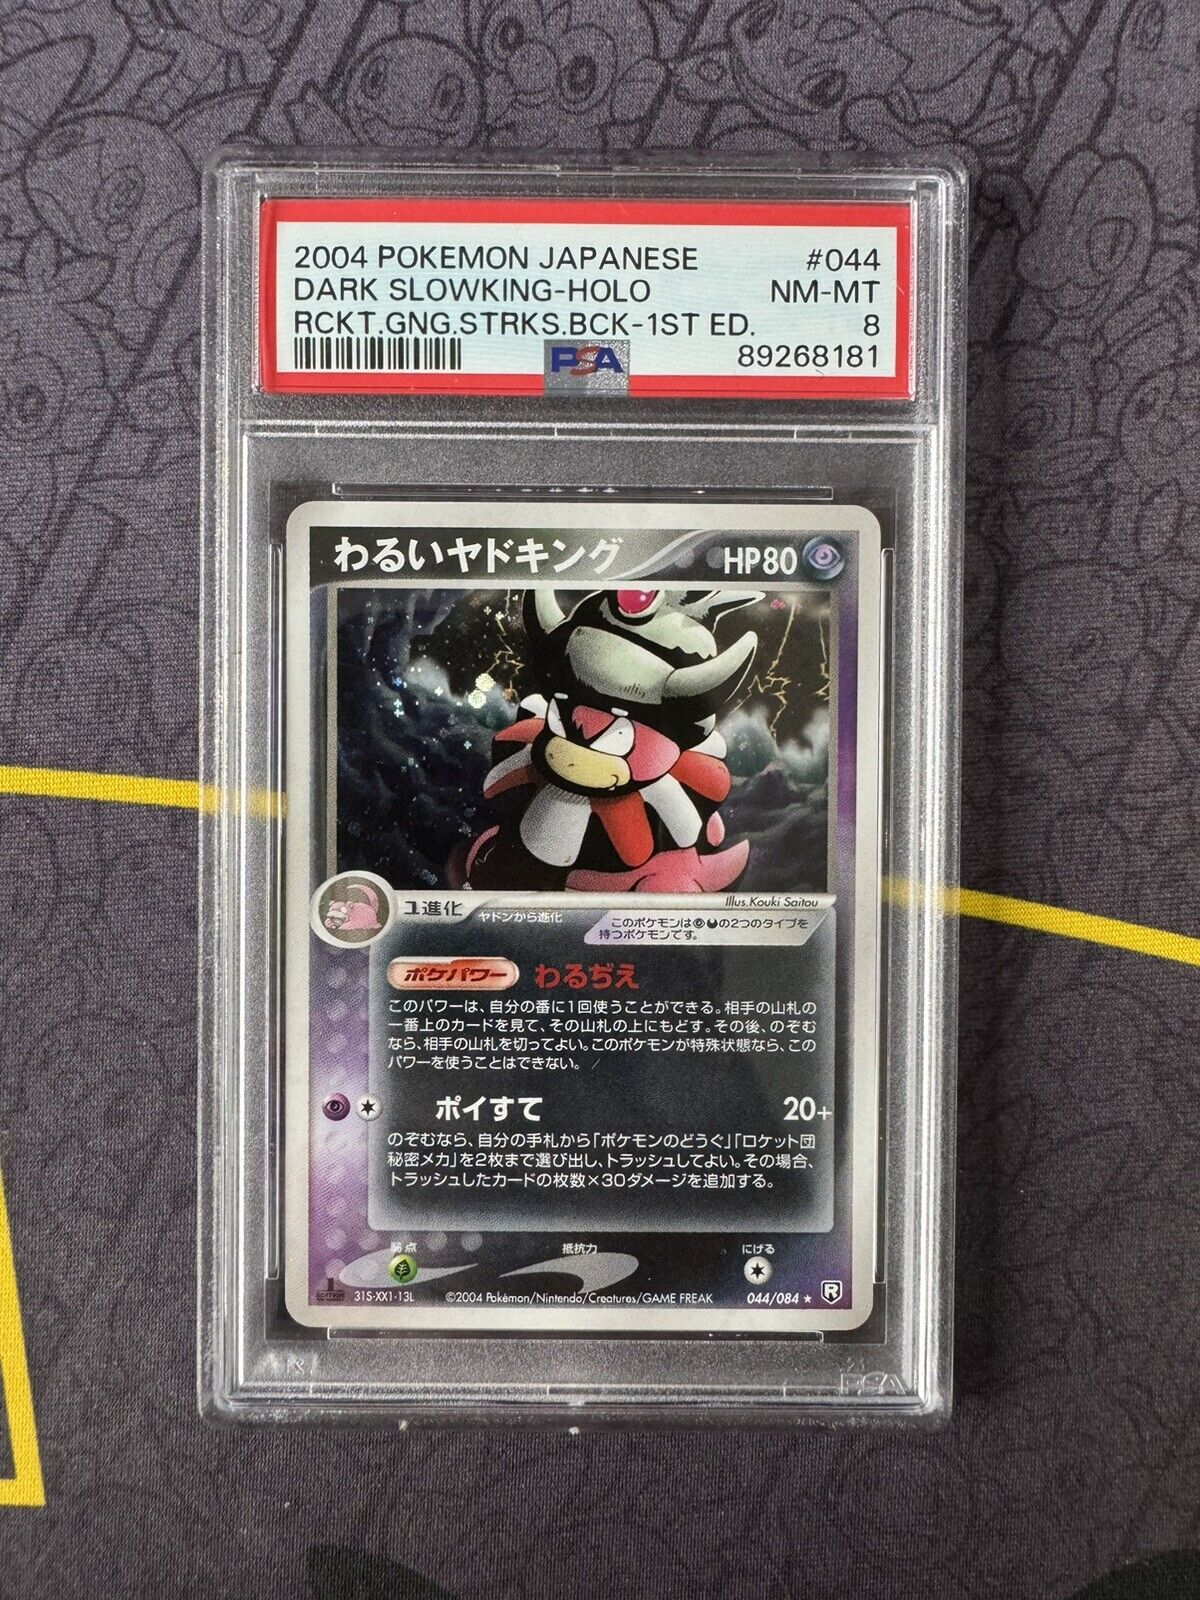 PSA 10 Pokemon Card Dark Slowking 044/084 1st Ed Japanese Rocket Gang Strikes